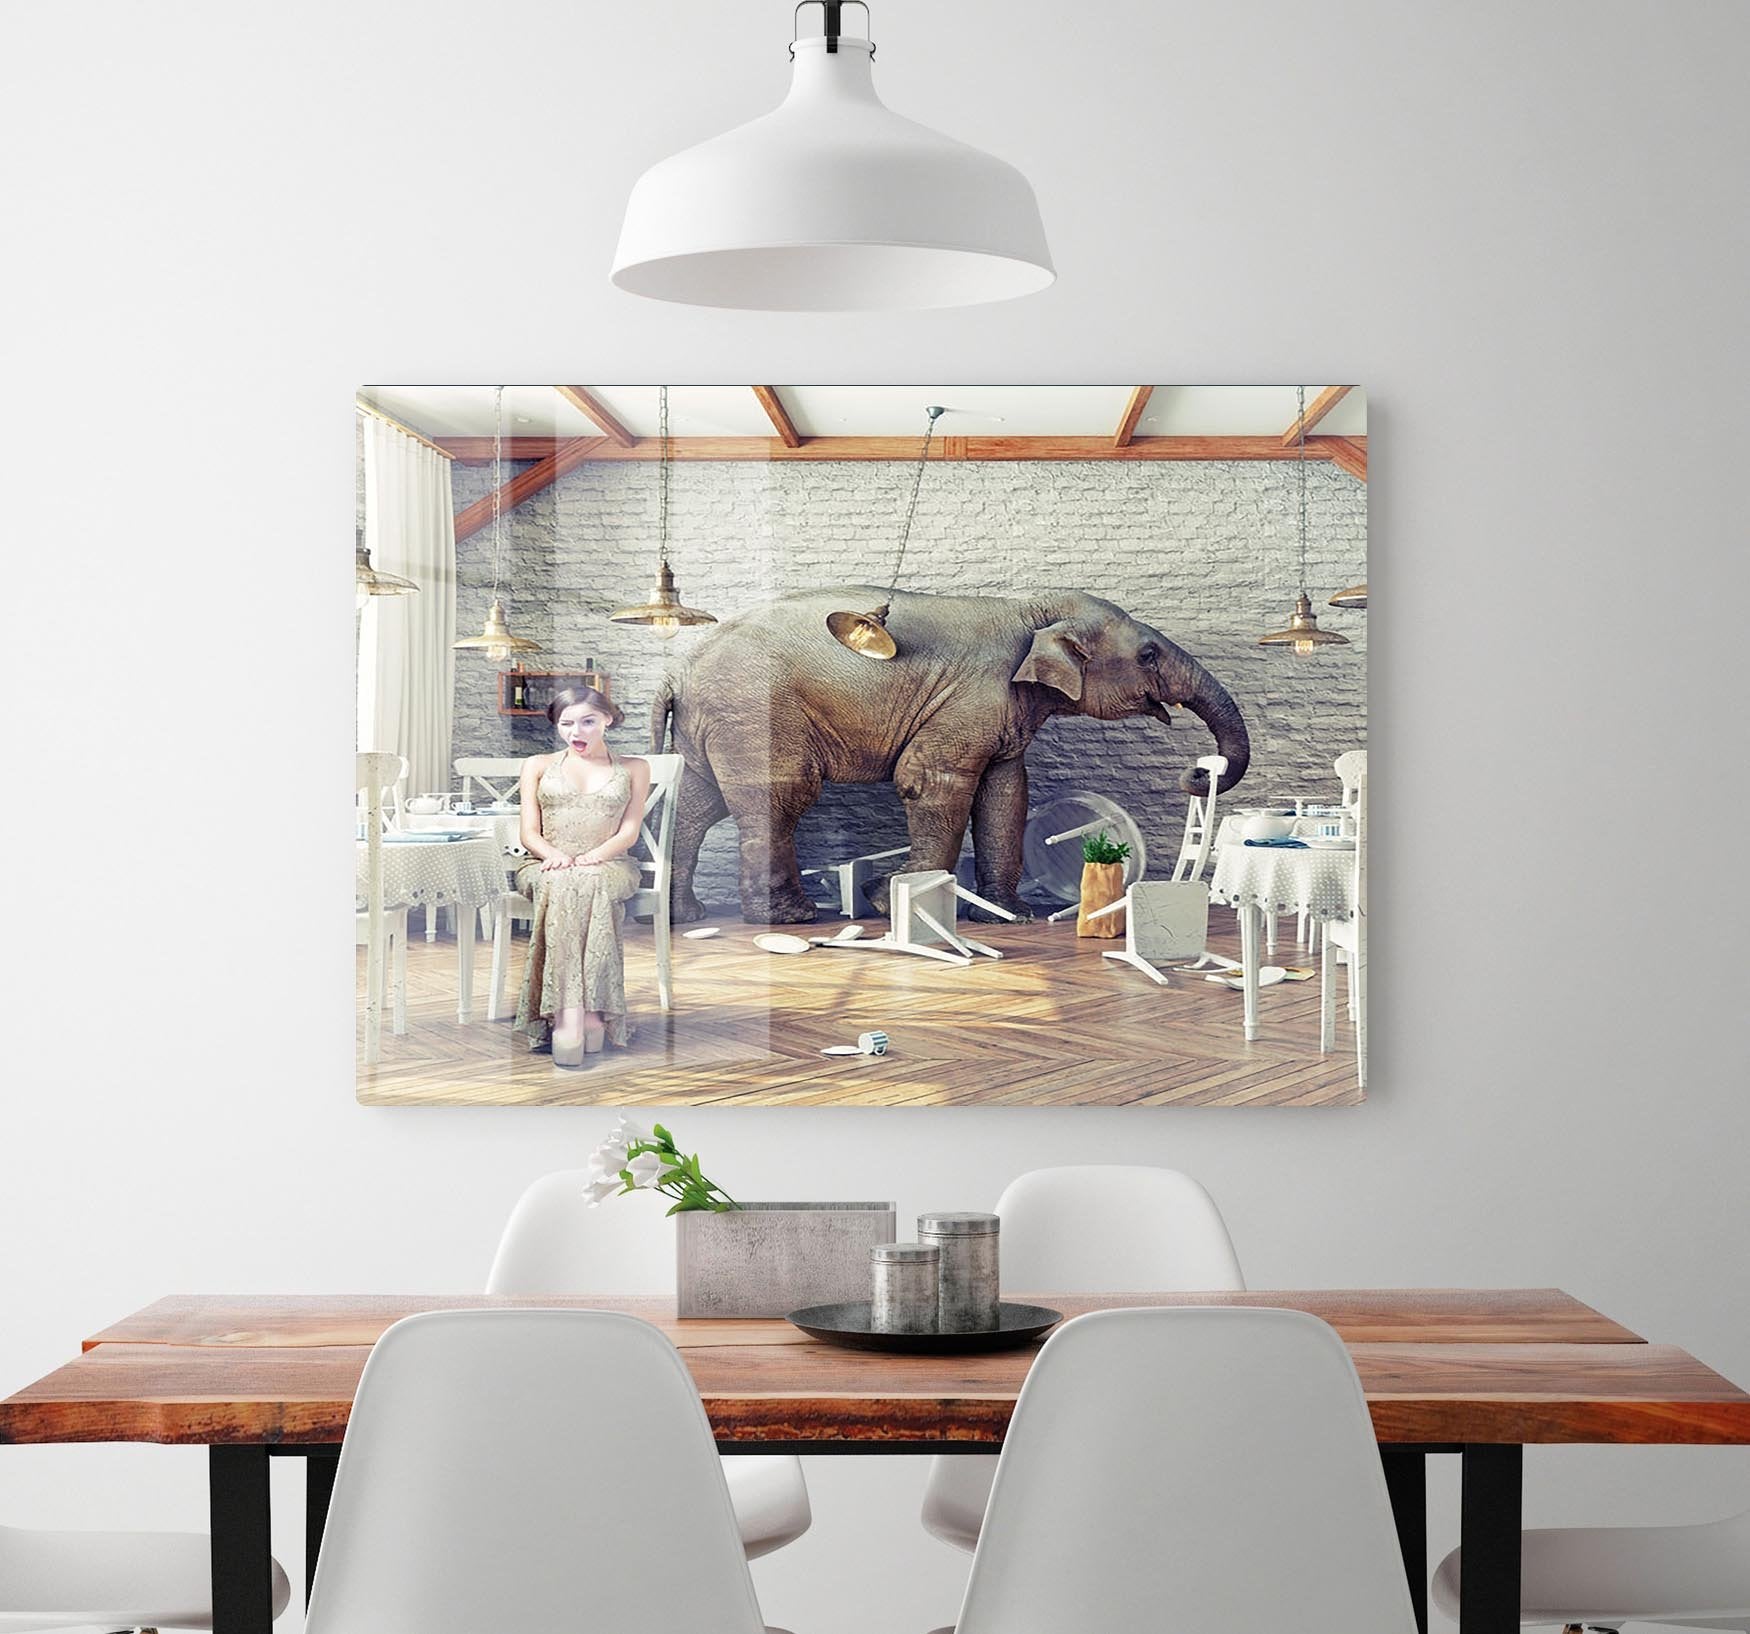 The elephant calm in a restaurant interior. photo combination concept HD Metal Print - Canvas Art Rocks - 2